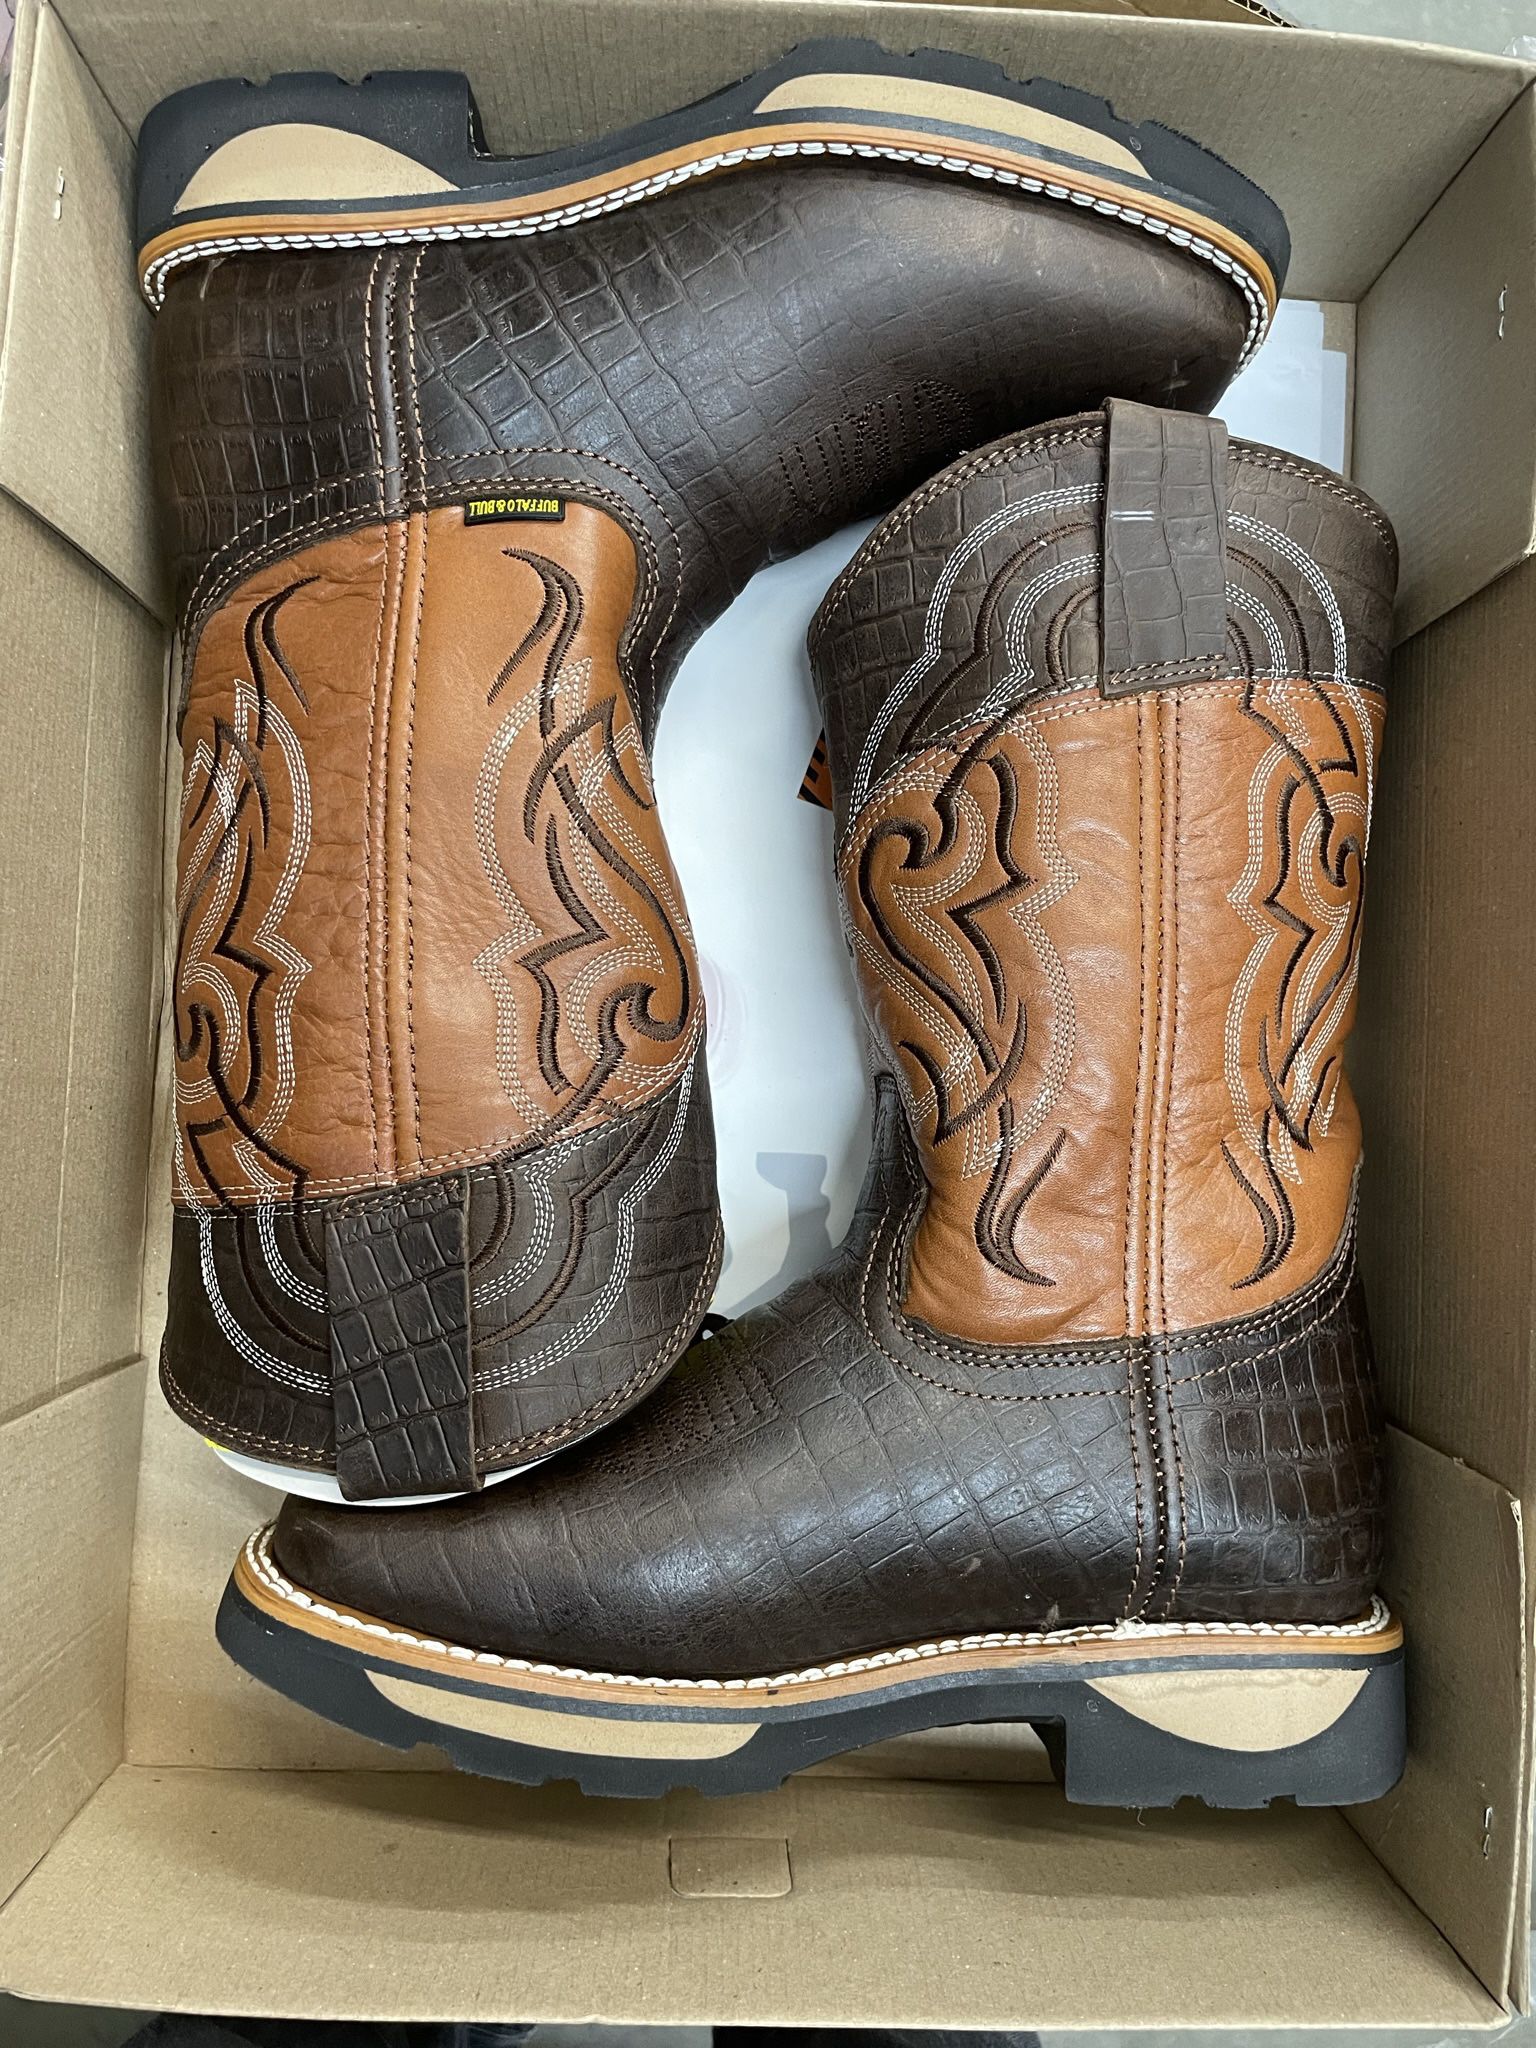 Buffalo Work Boots Size 8-9.5